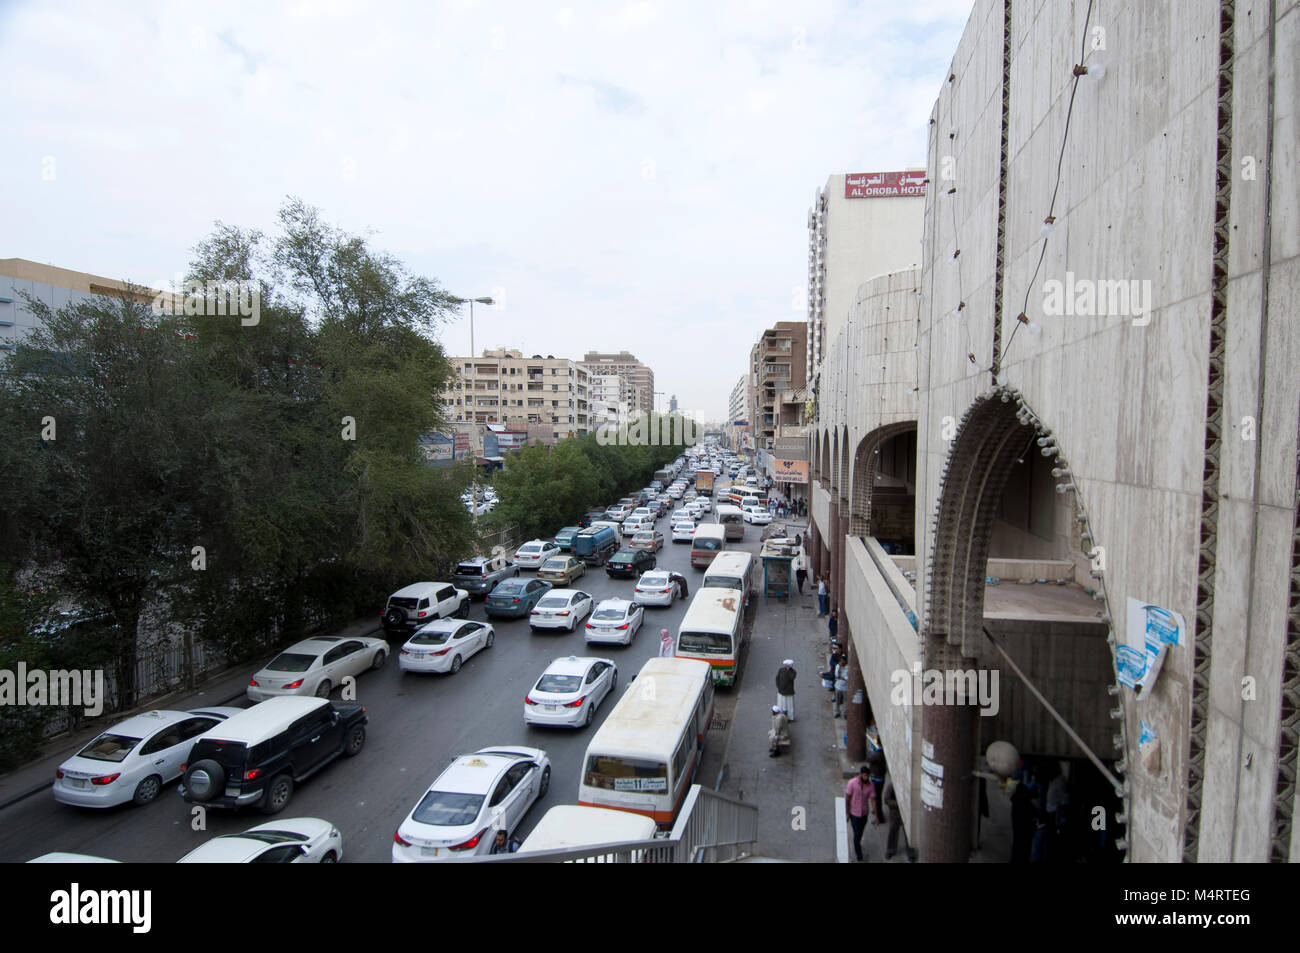 Batha Steet, traffico di automobili nel vecchio Riyadh, Arabia Saudita, 01.12.2016 Foto Stock